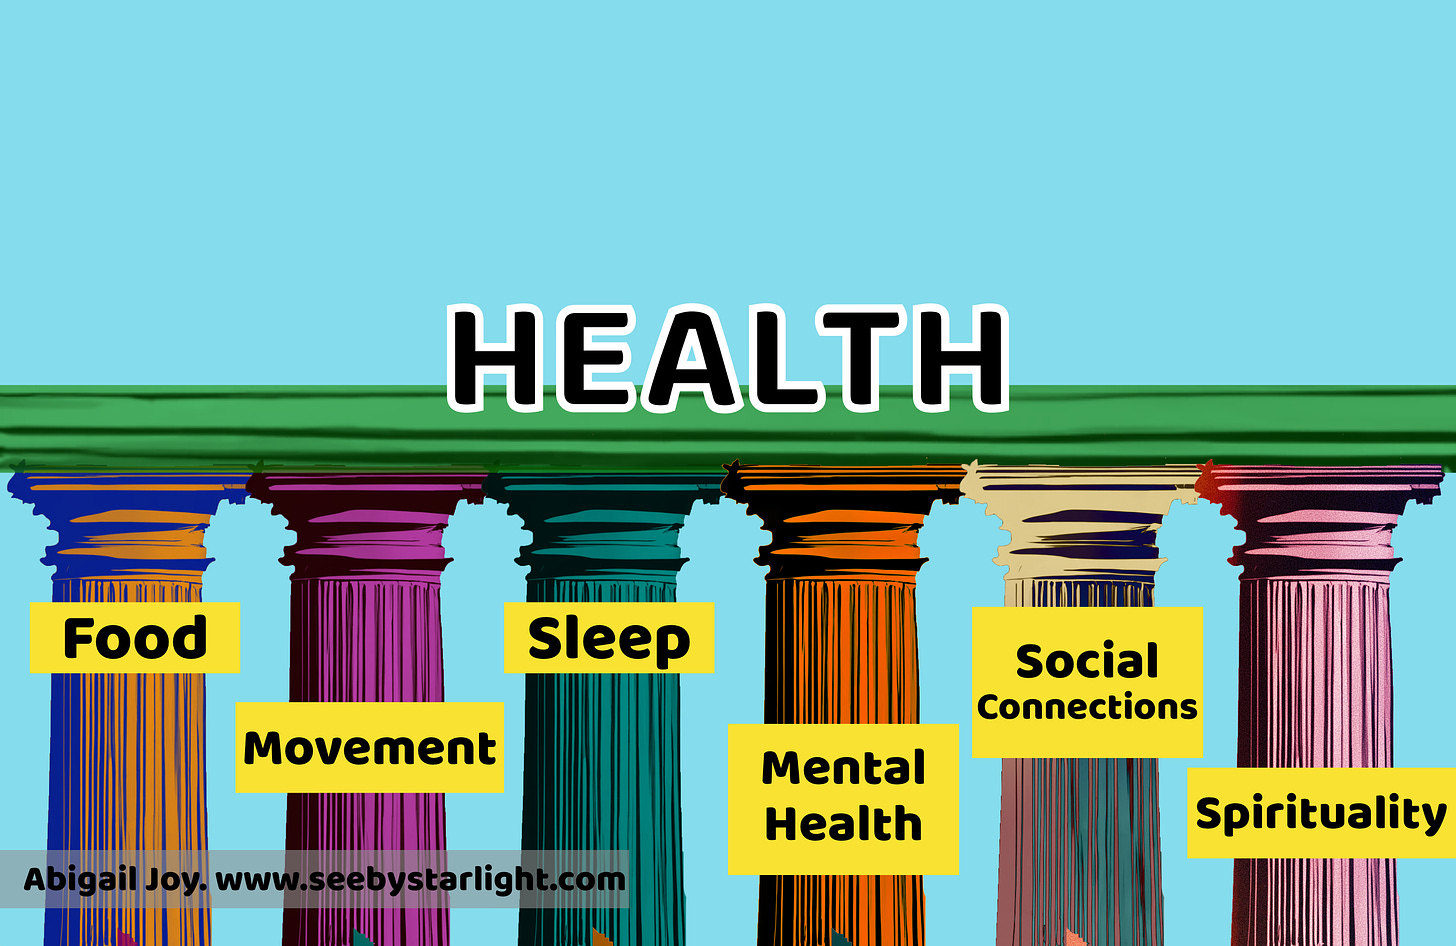 6 Pillars of health: food, movement, sleep, mental health, social connections, spirituality